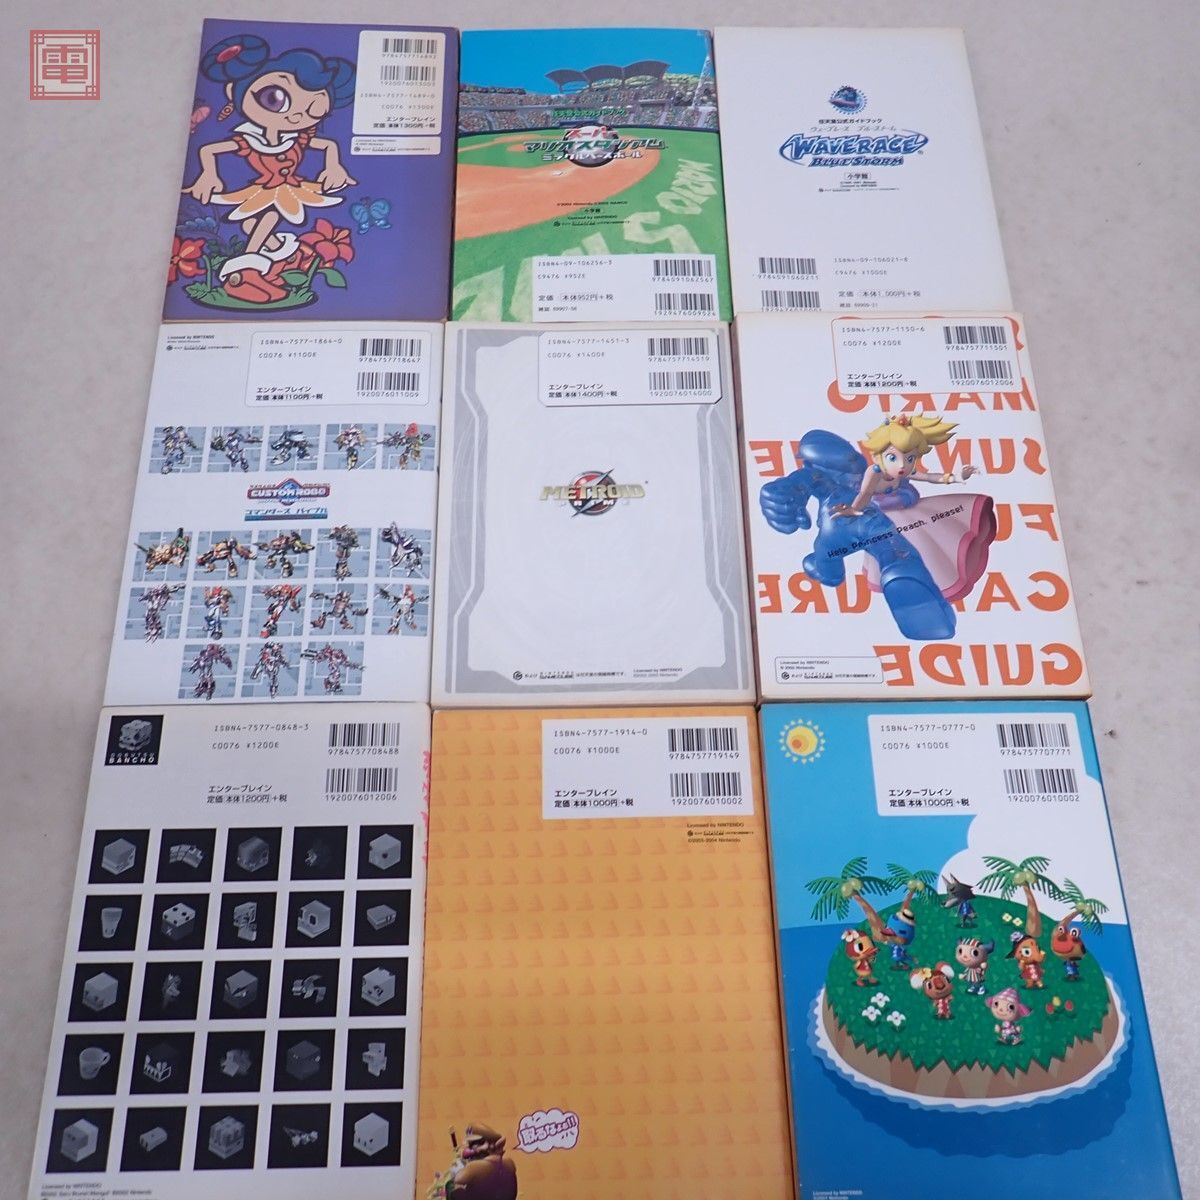  capture book GC Game Cube custom Robot meto Lloyd prime Animal Crossing + gift Piaa pikmin Rune II etc. 19 pcs. set [20